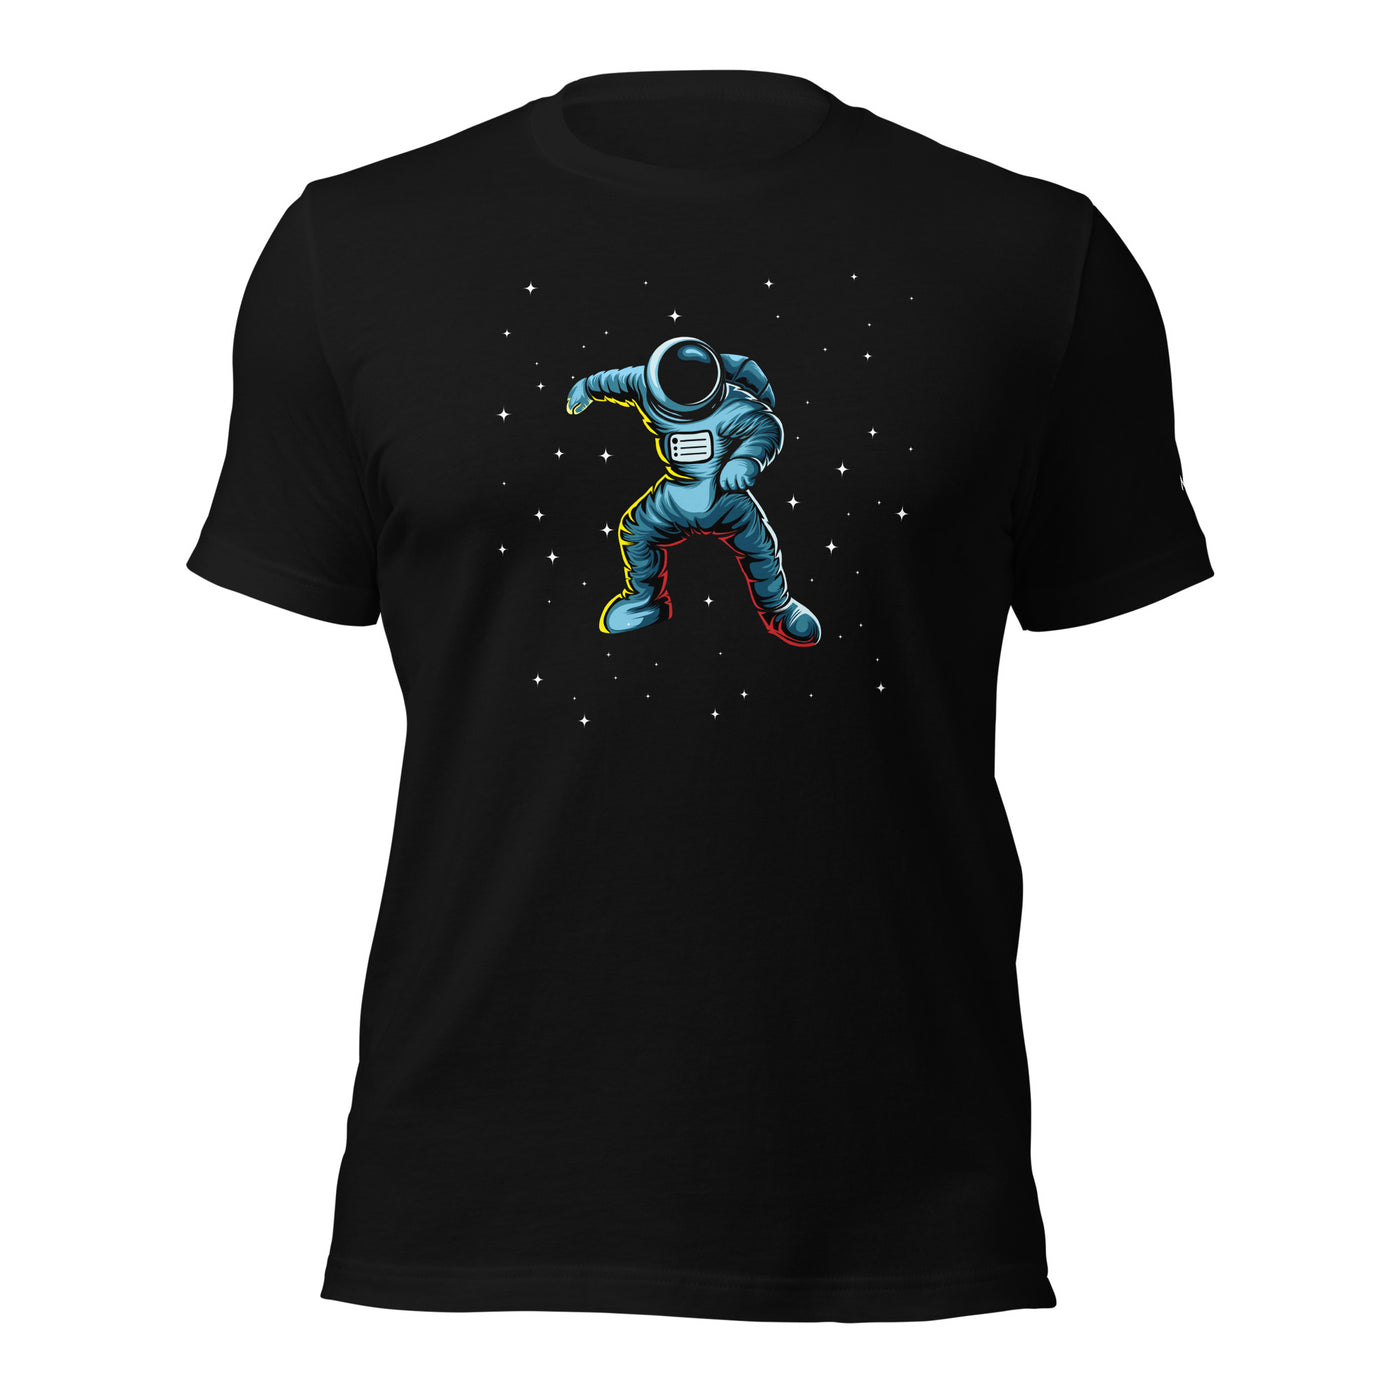 My Blank Space - Unisex t-shirt